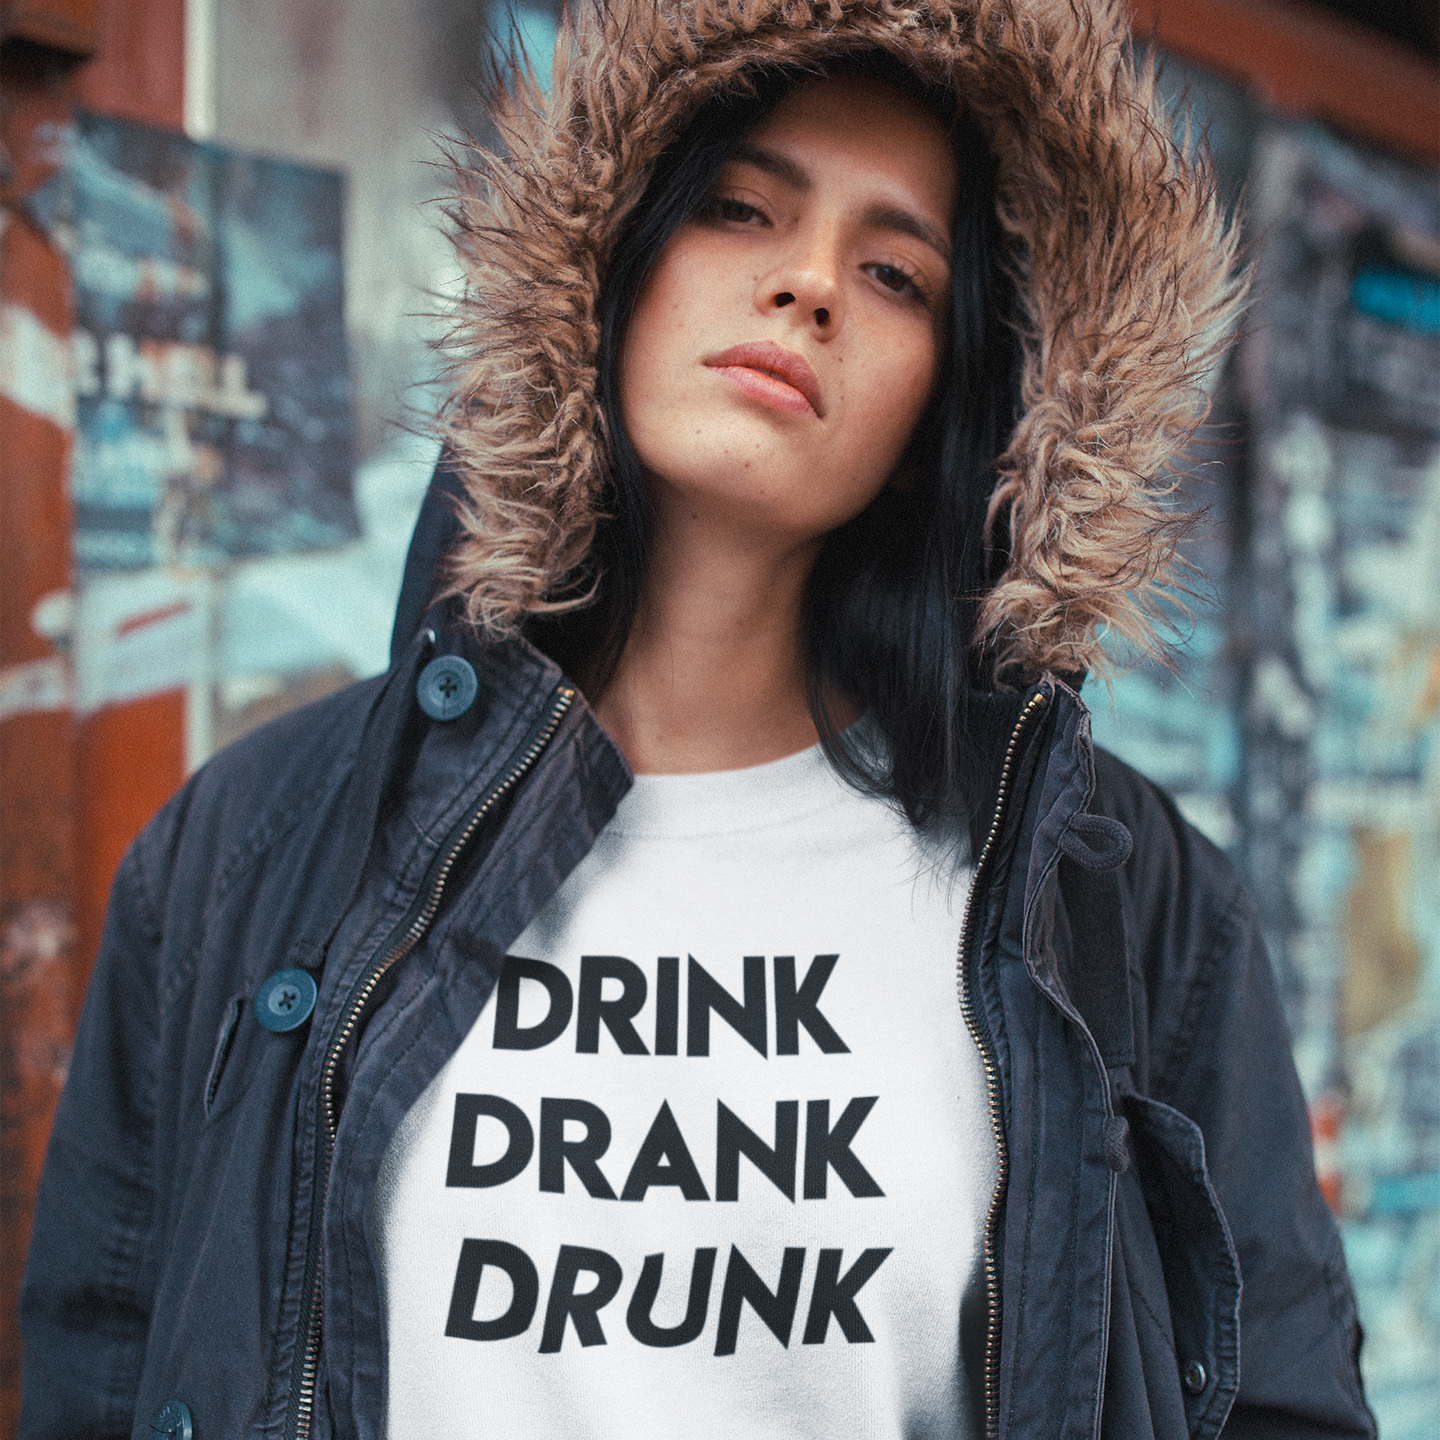 'Drink, Drank, Drunk' sweater